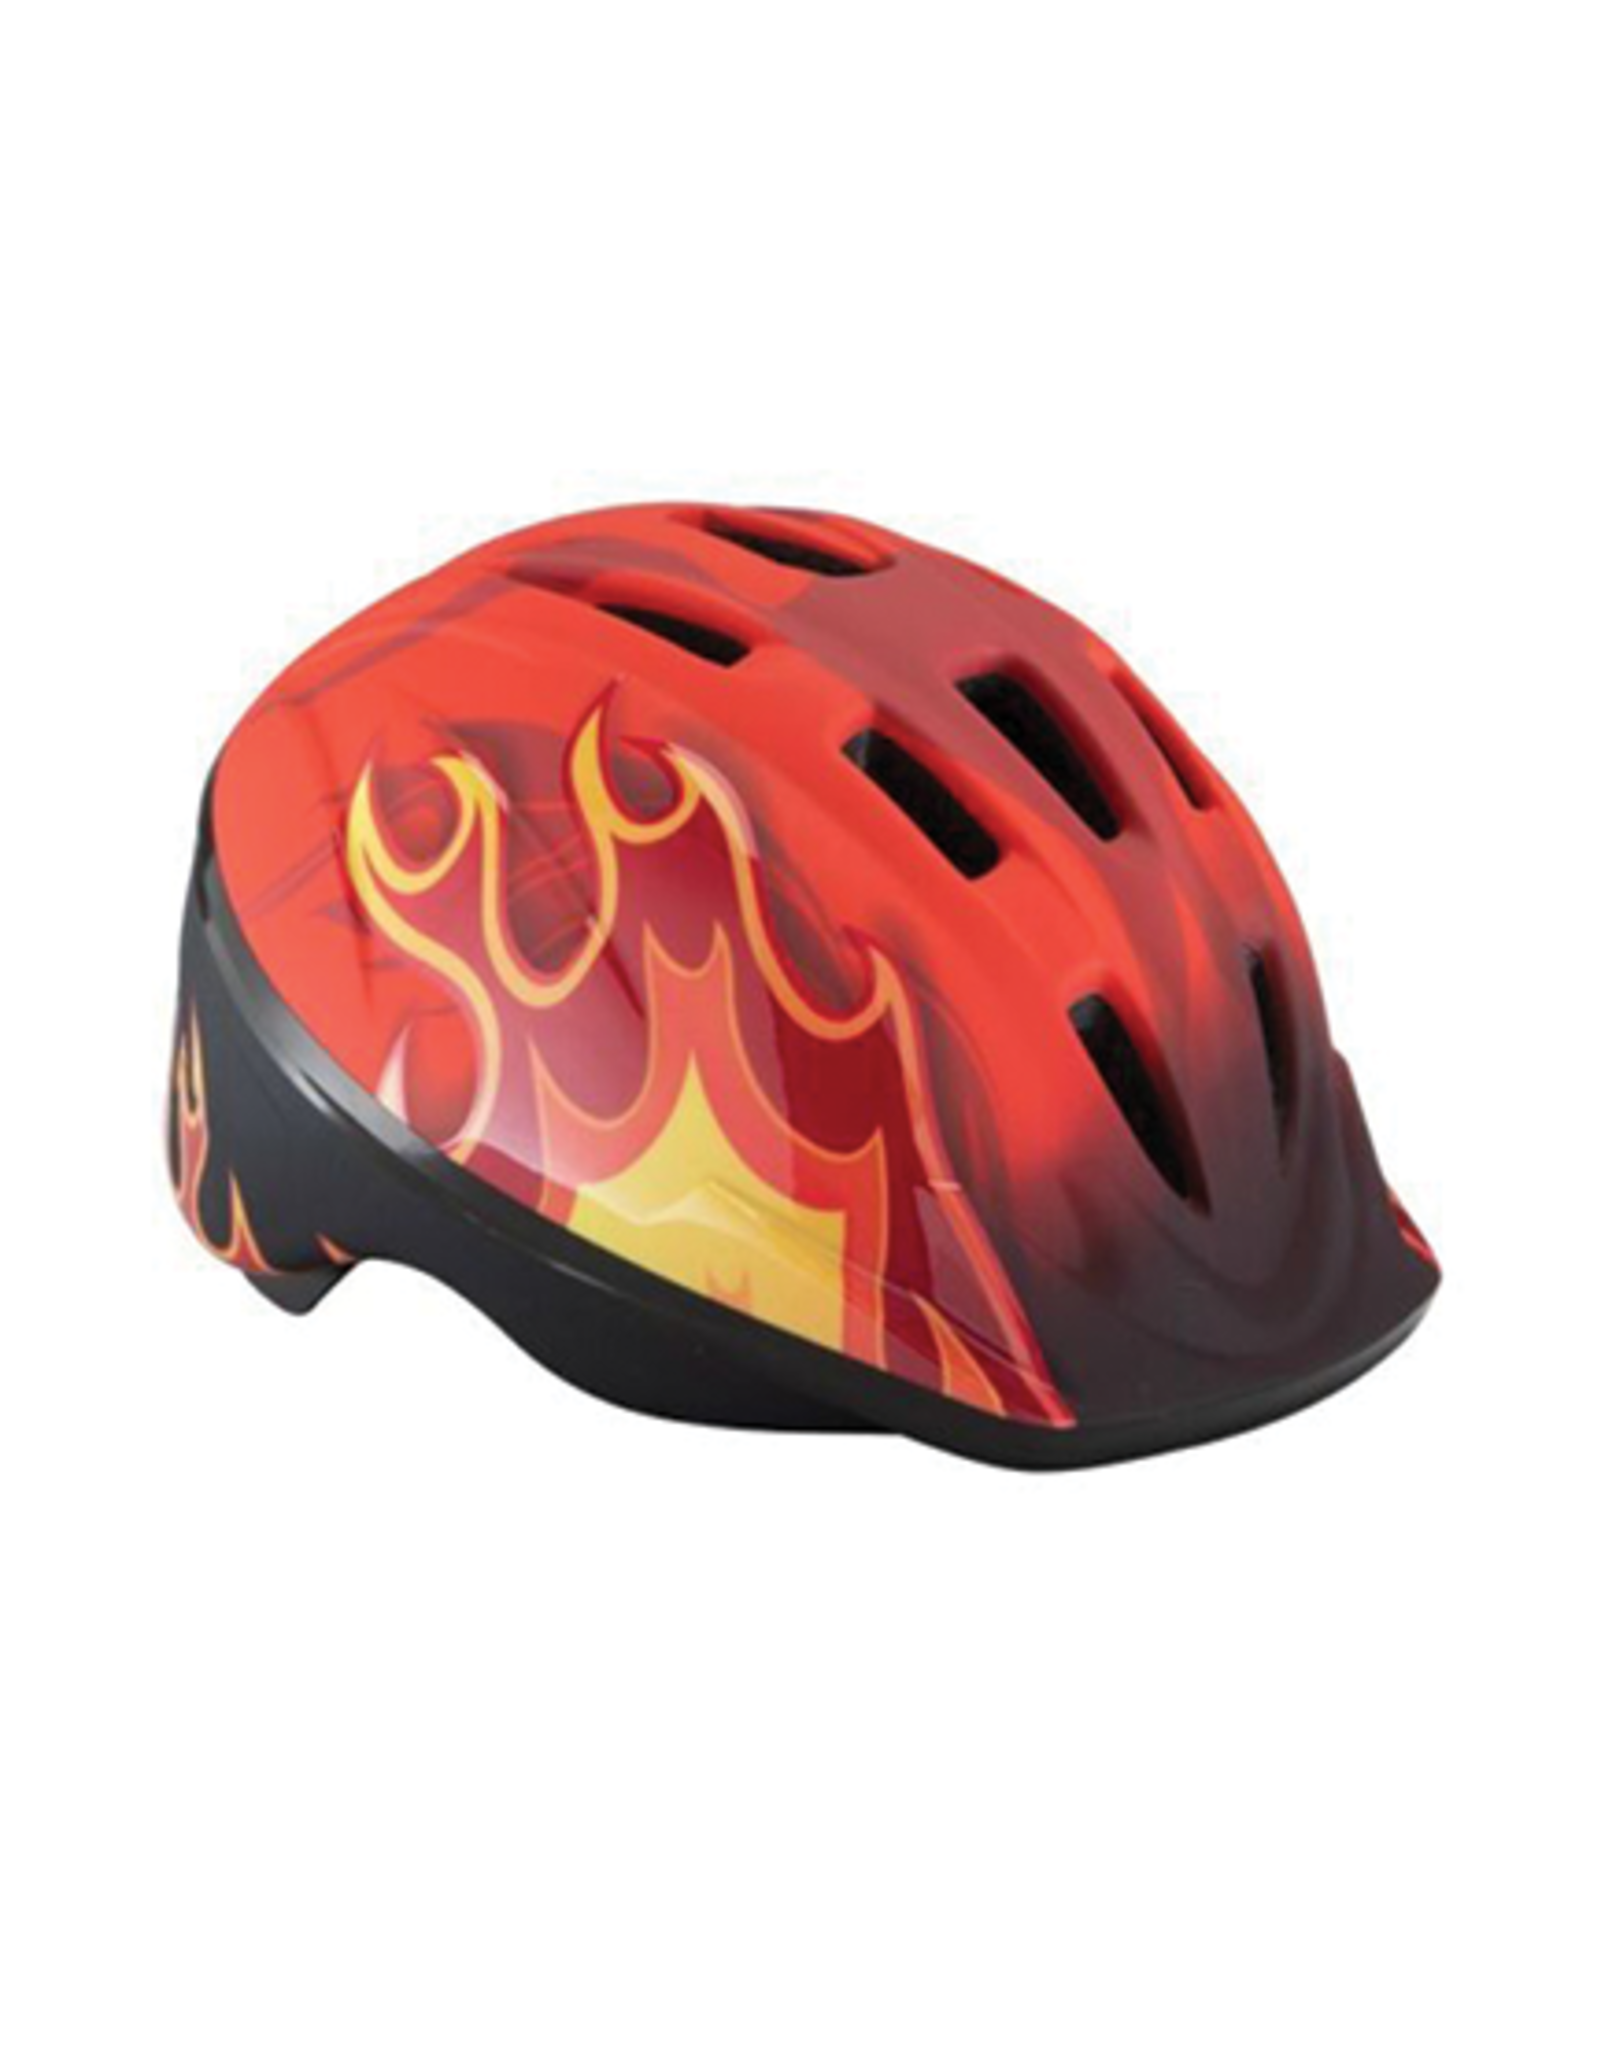 Schwinn Classic Child Bike Helmet, Flames (Ages 5+)